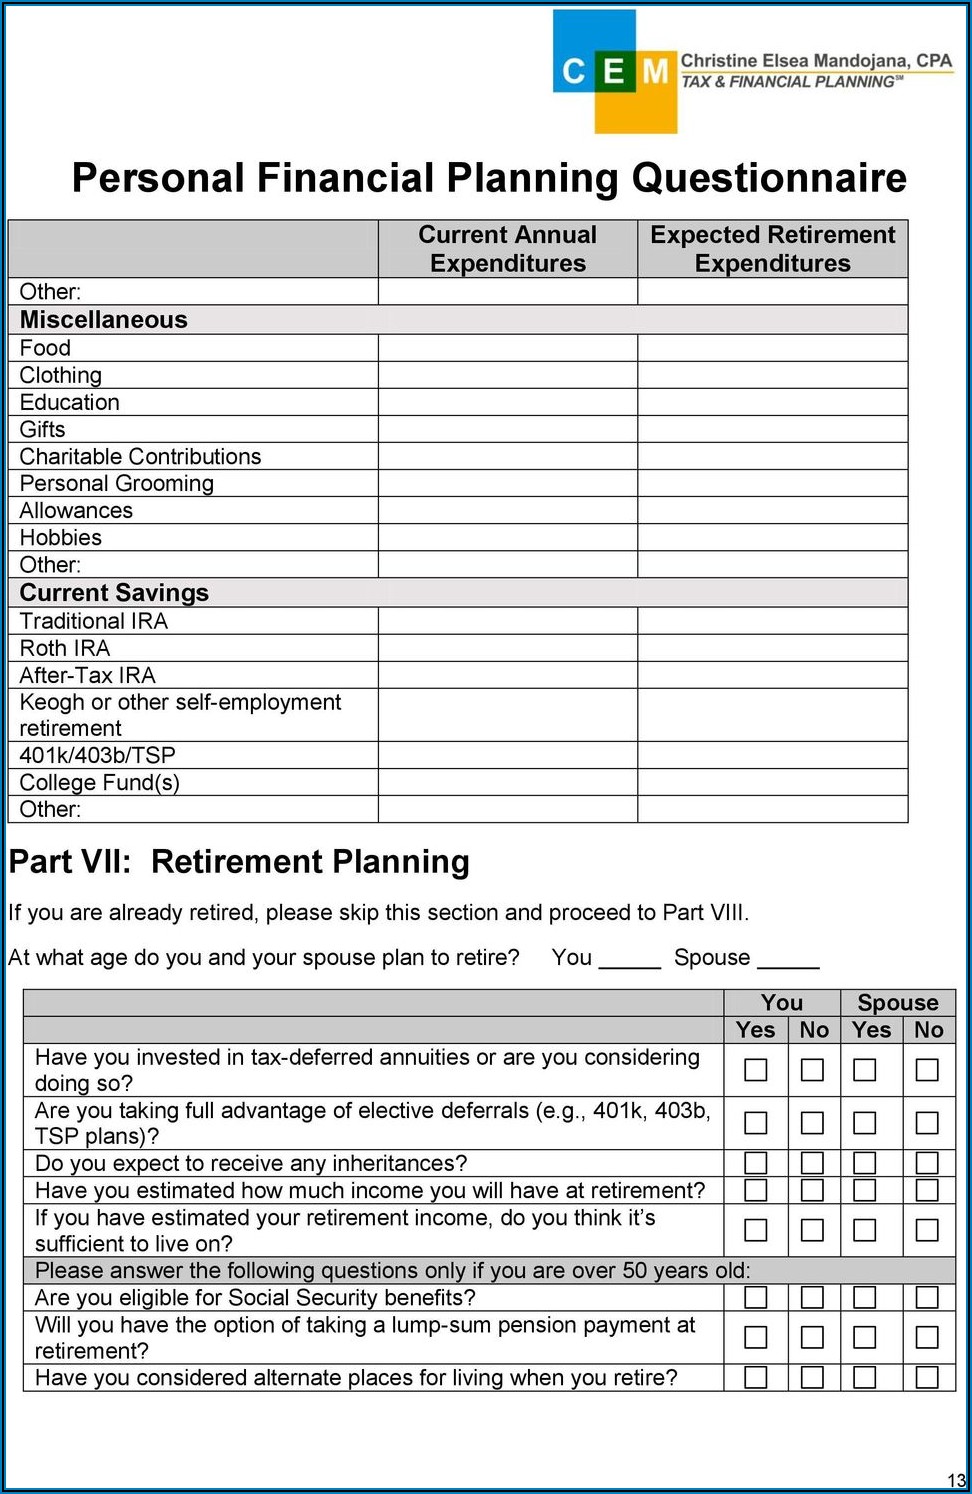 Estate Planning Client Intake Form